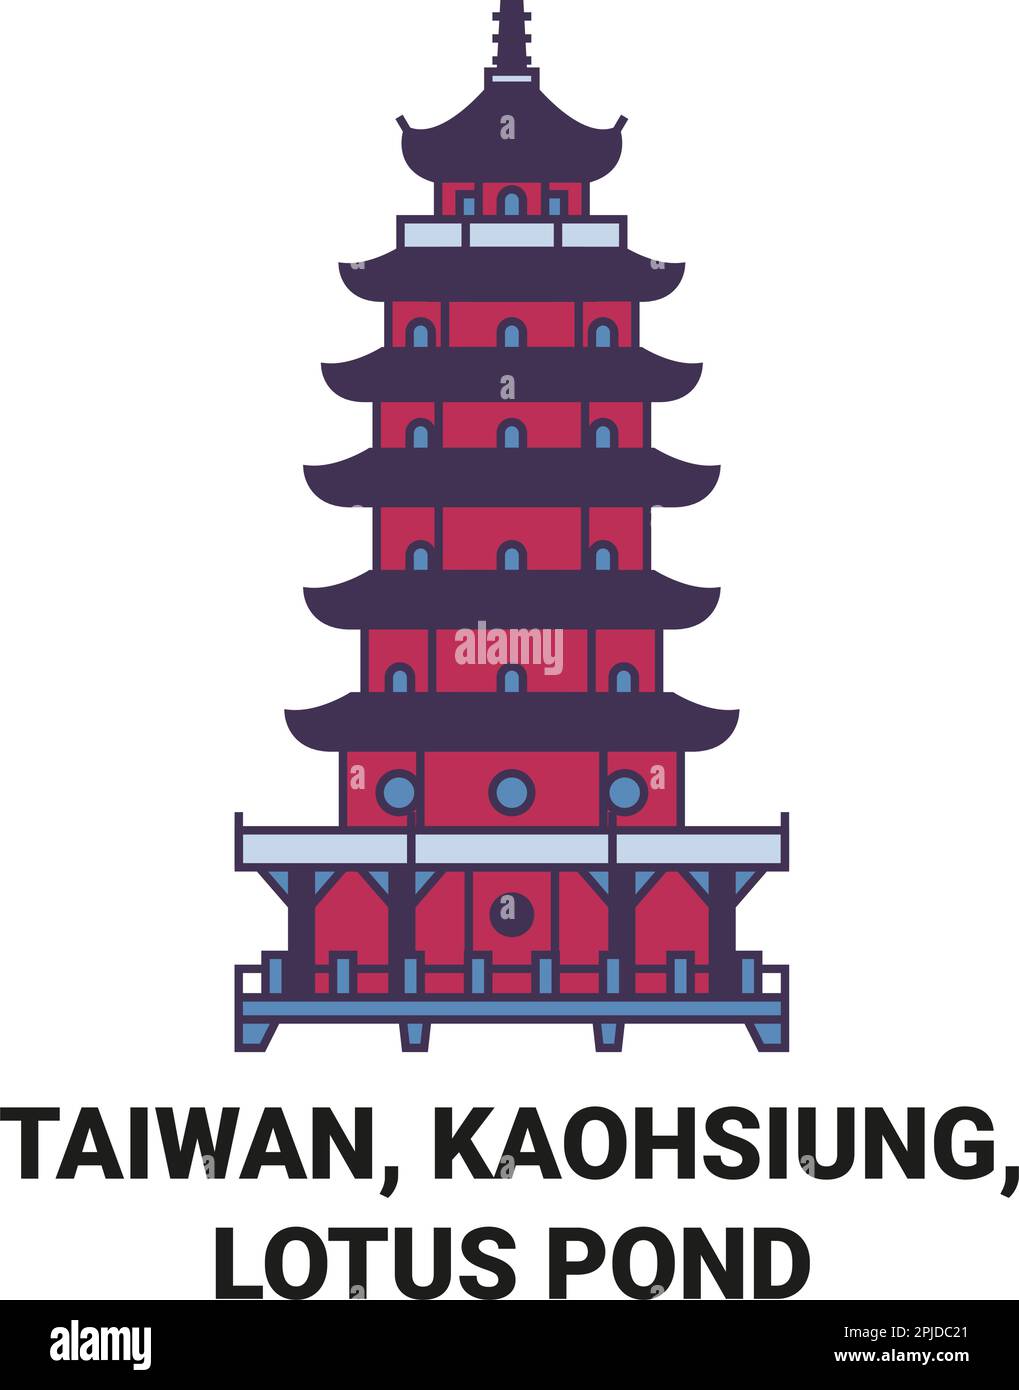 Taiwan, Kaohsiung, Lotus Pond travel landmark vector illustration Stock Vector